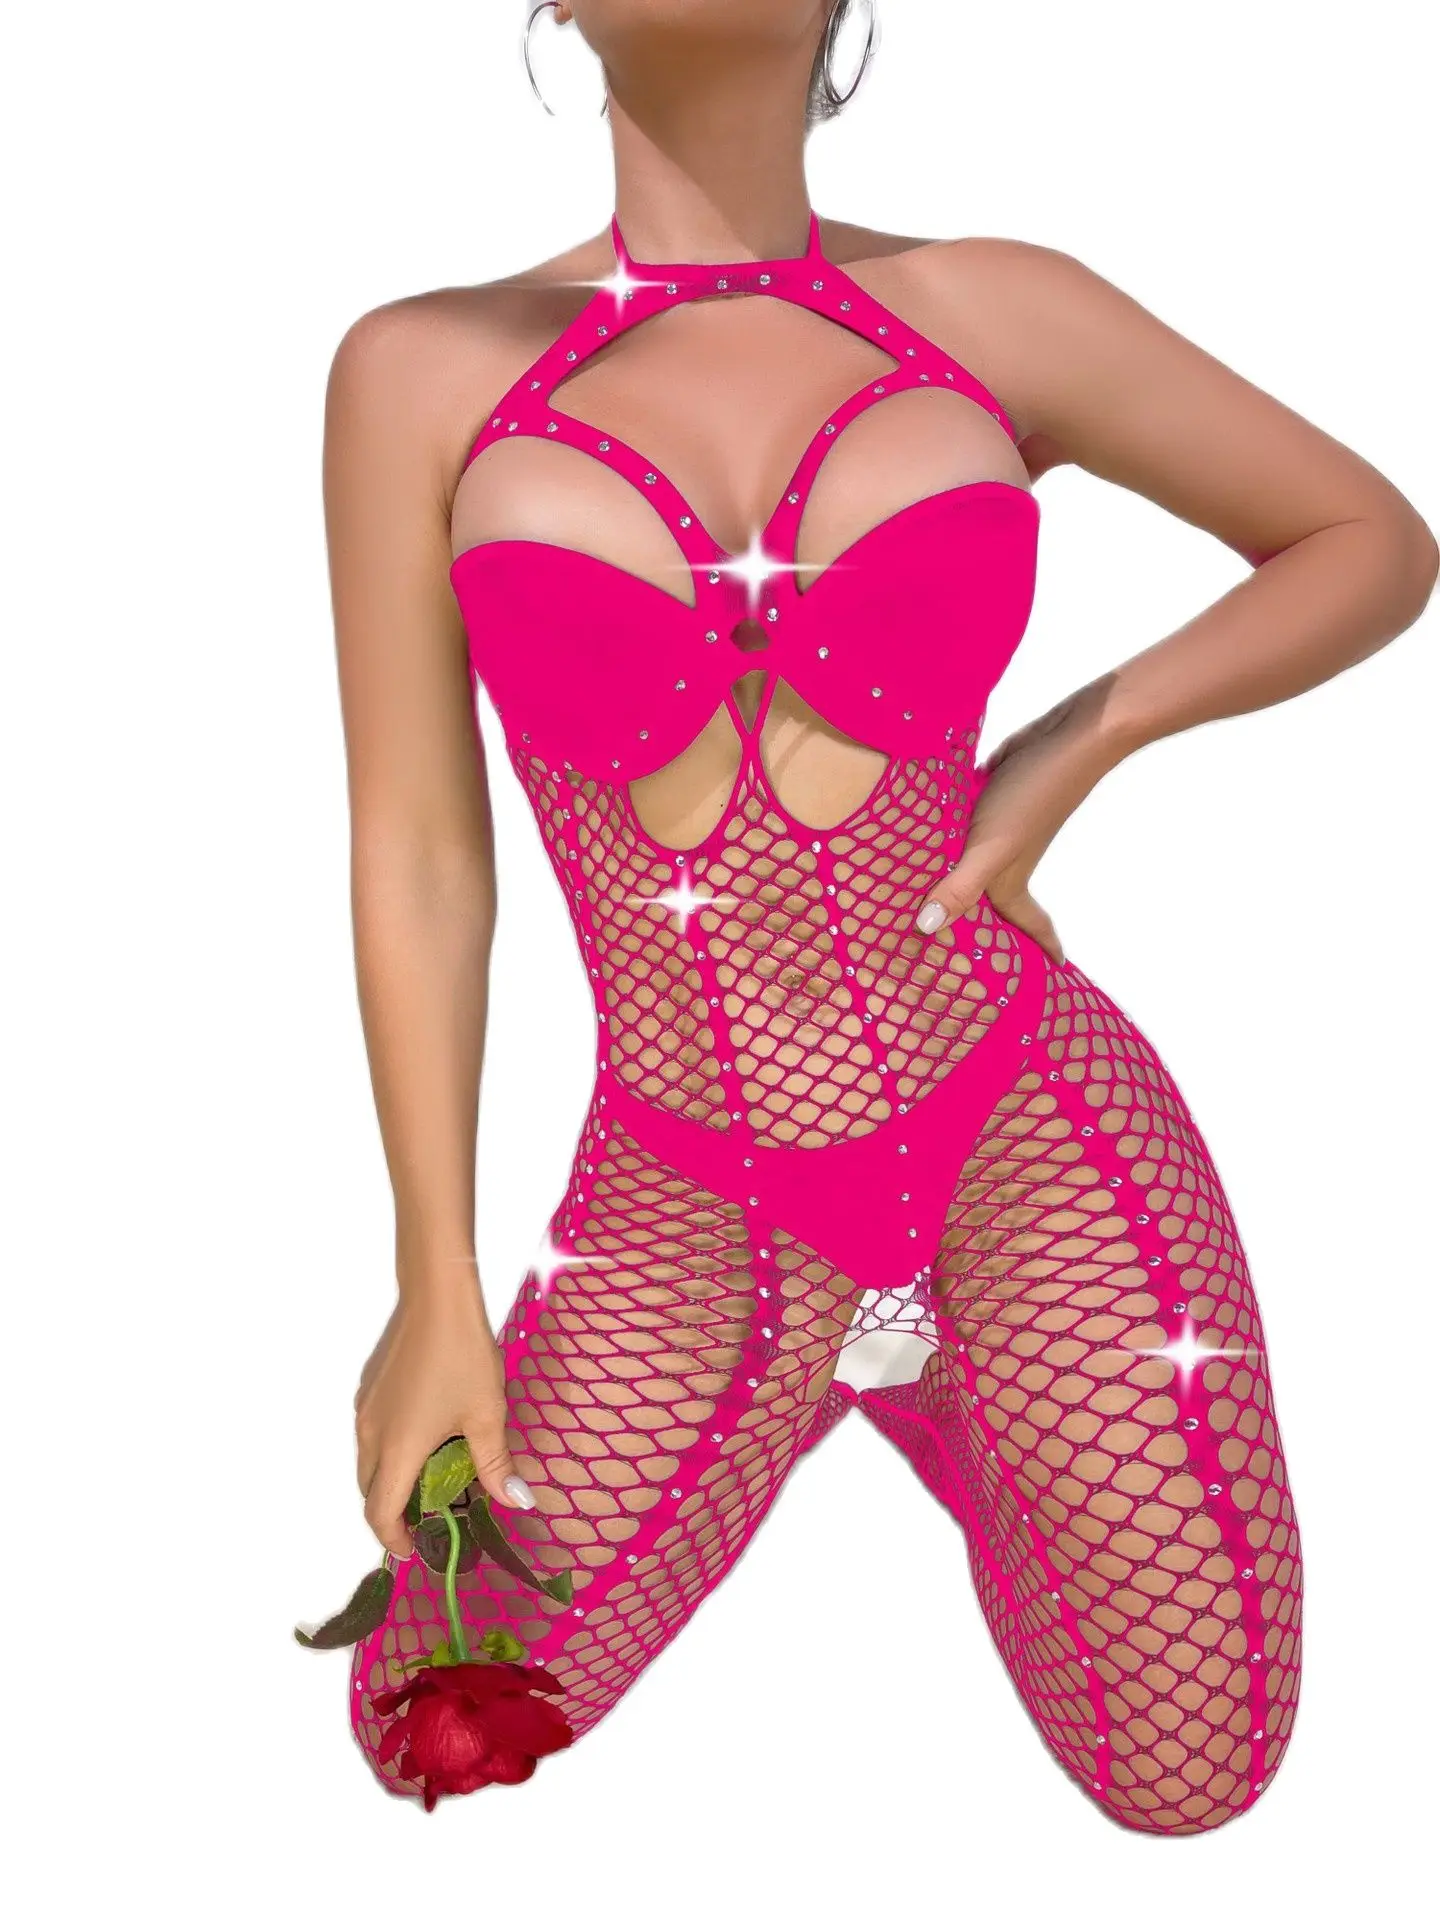 

Porno Rhinestone BodyStocking Elastic Fishnet Lingerie Exotic Dance Wear Nightclub Costume Underwear Erotic Jumpsuits Teddies